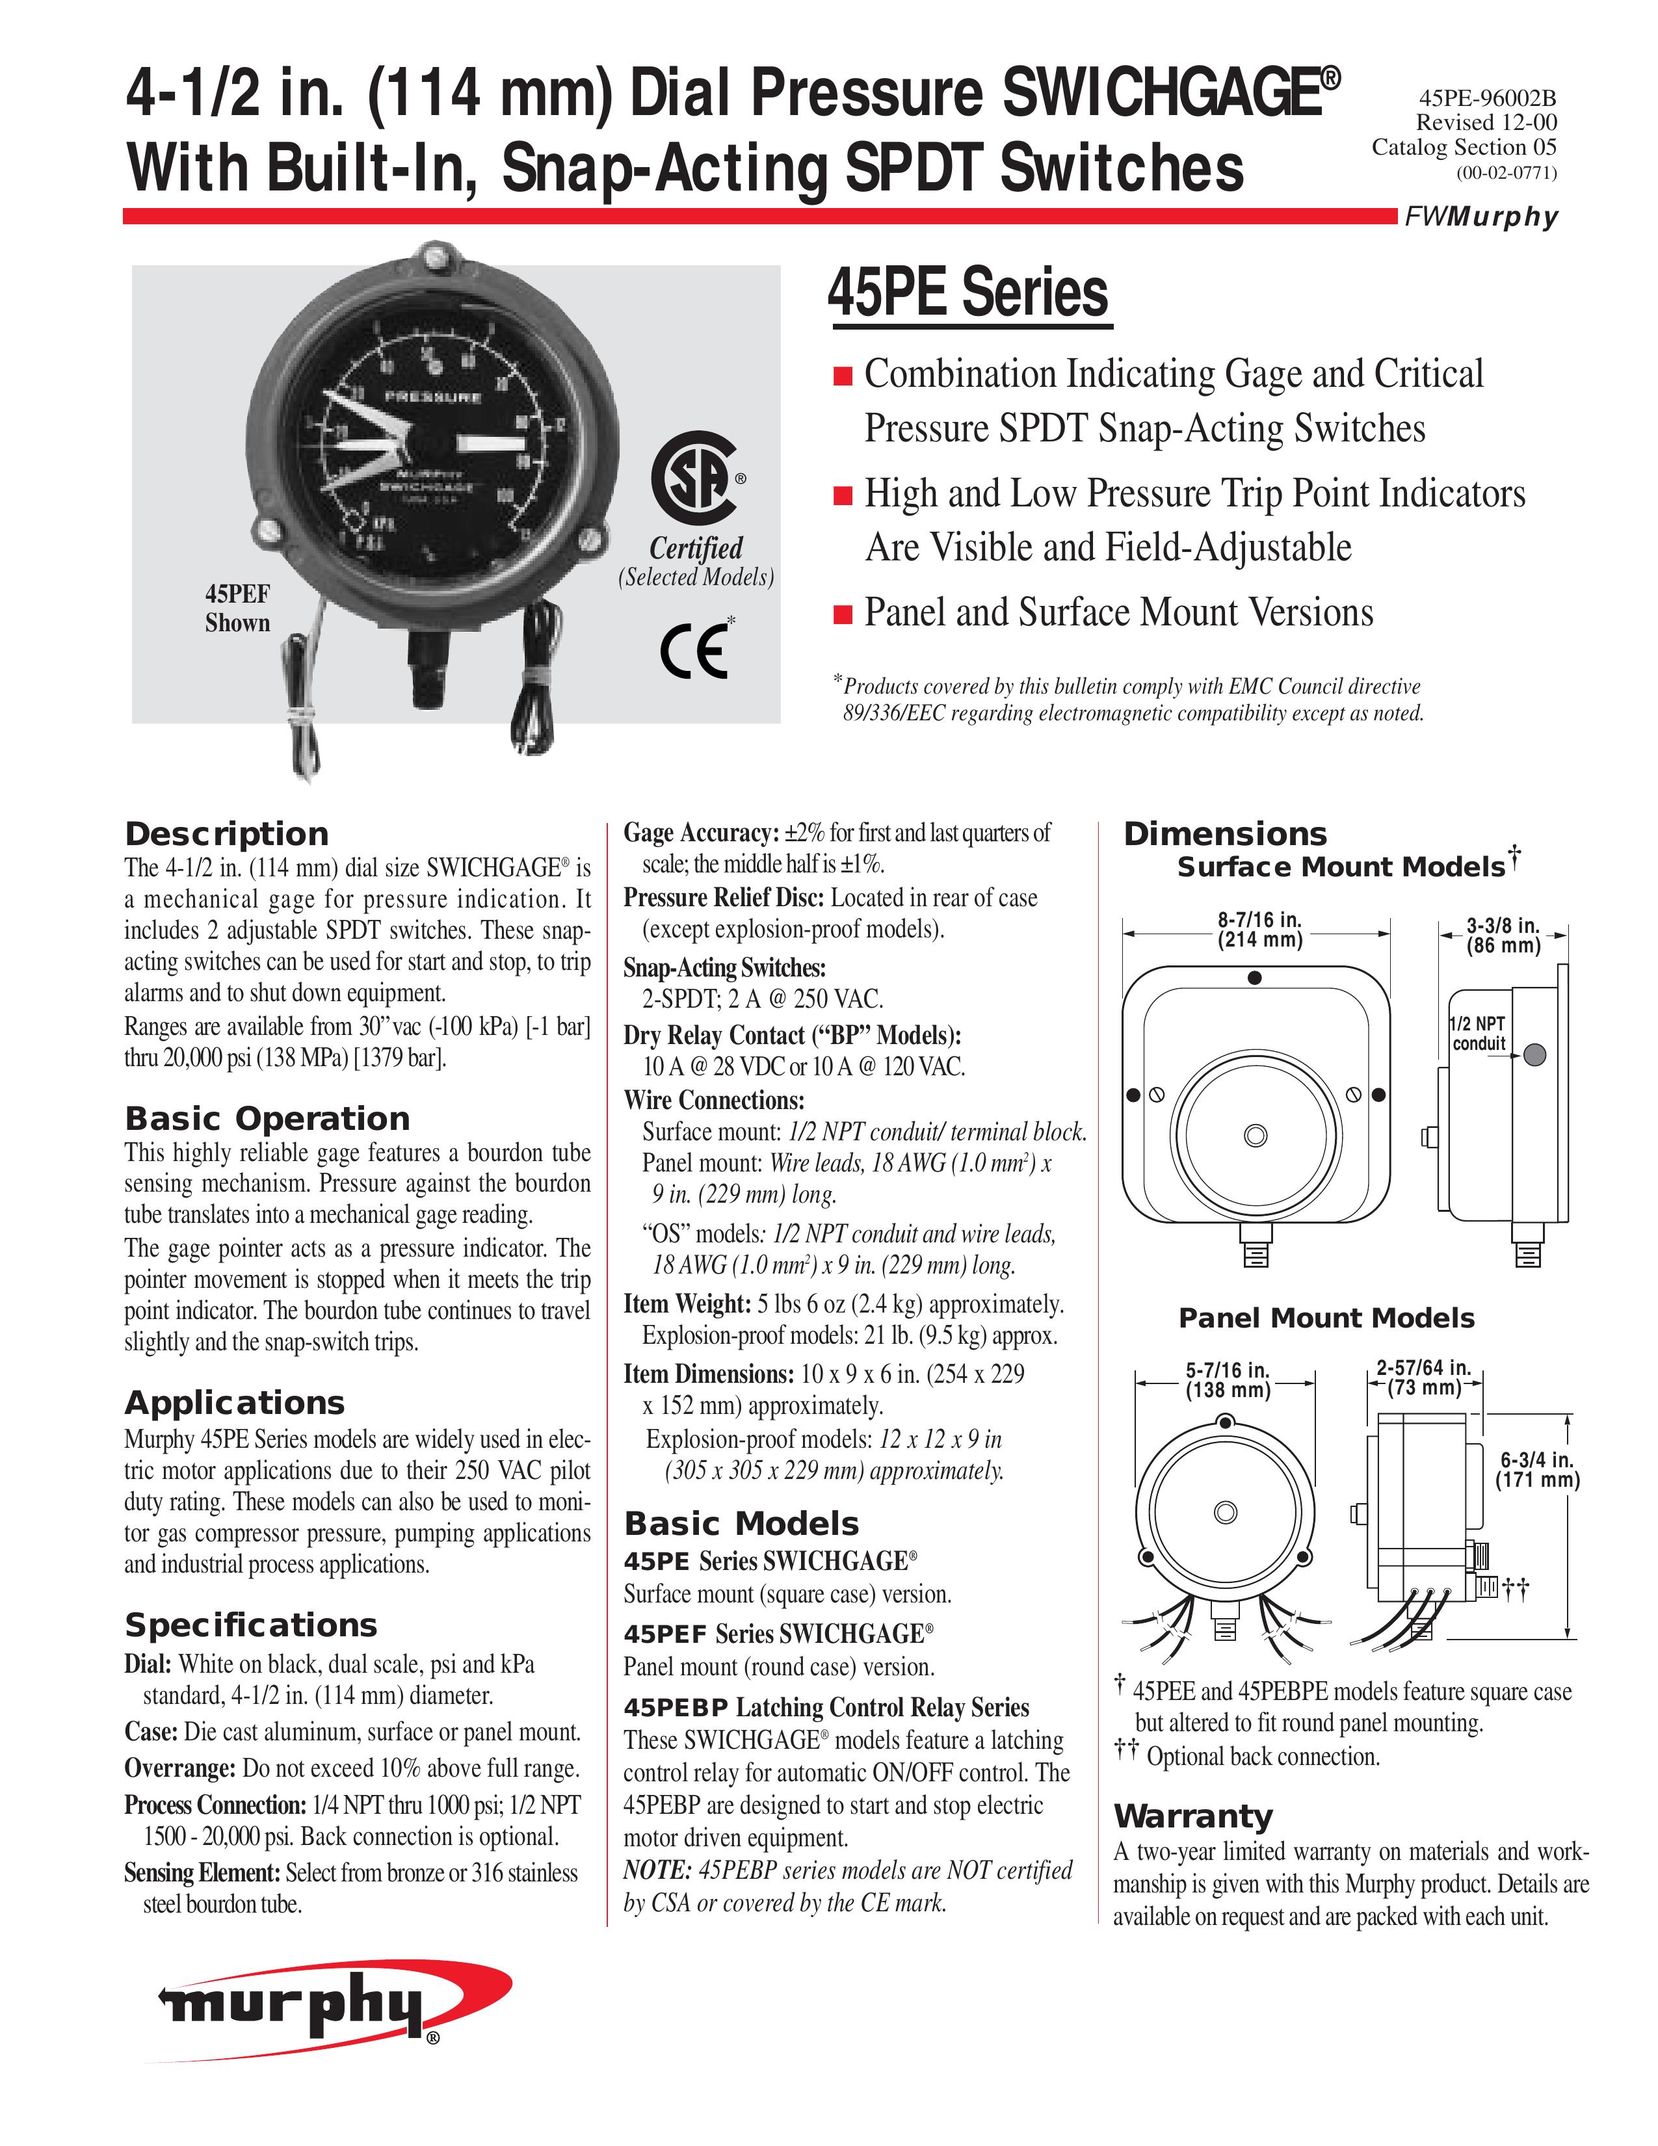 Murphy 45PE Series Switch User Manual